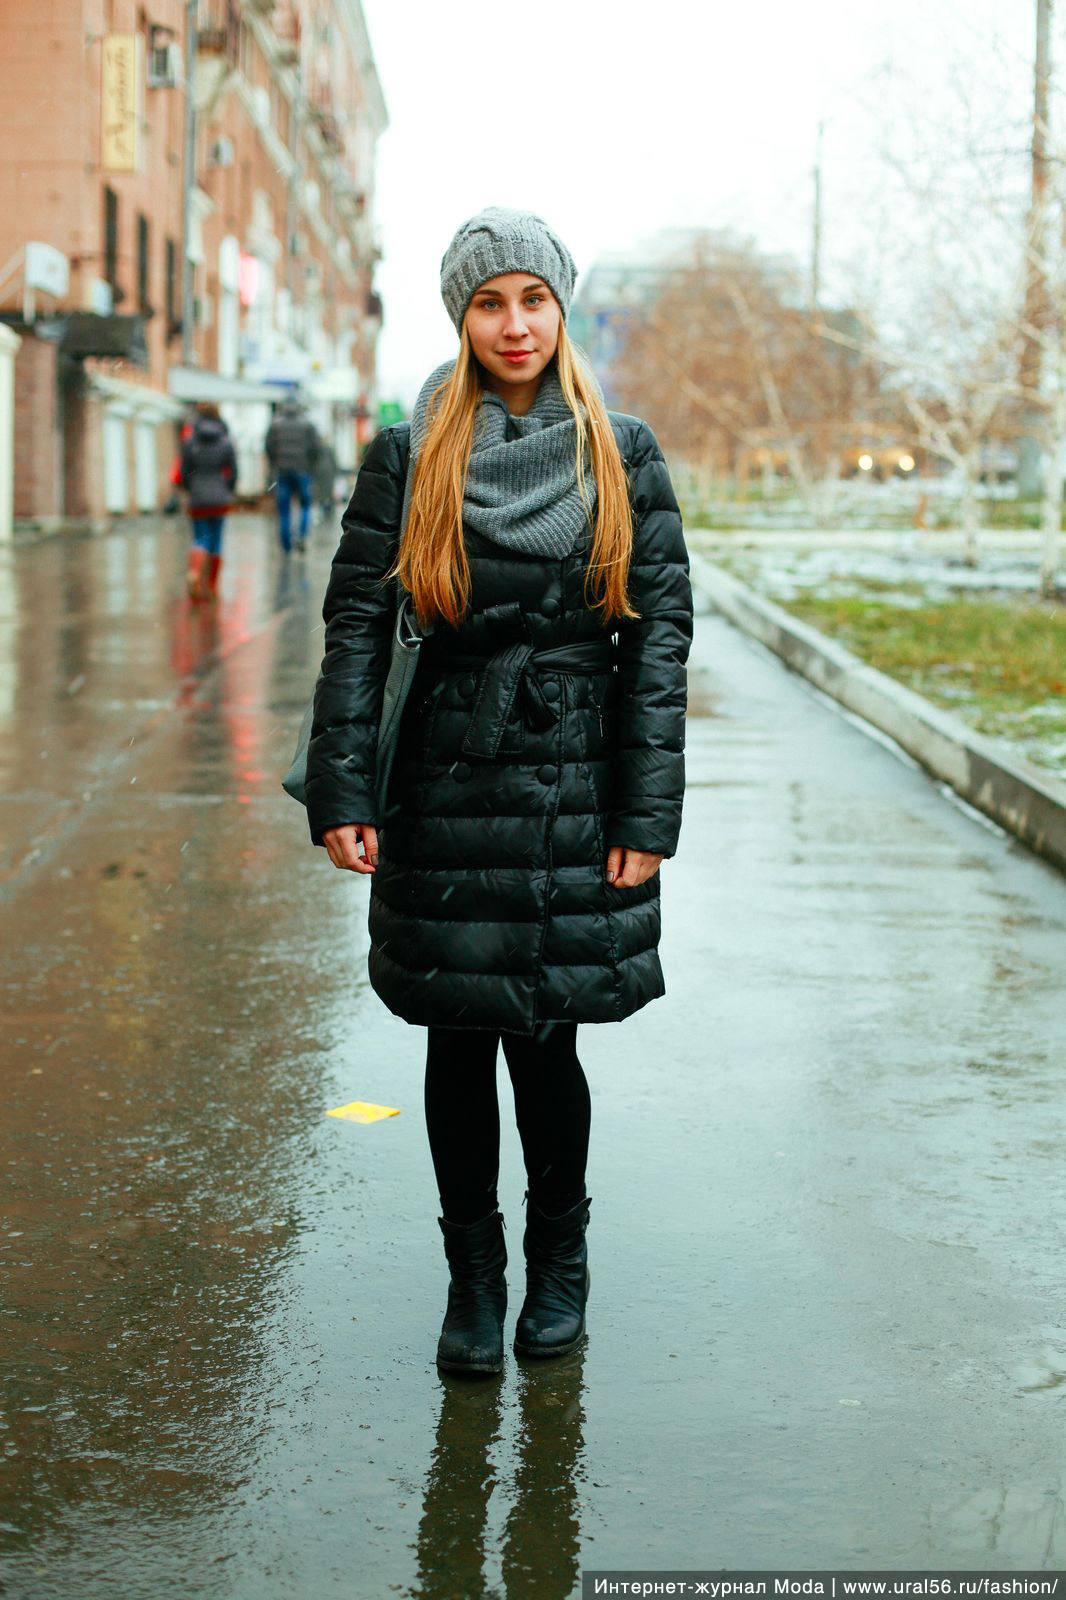 Streetstyle december 2013: Дарья